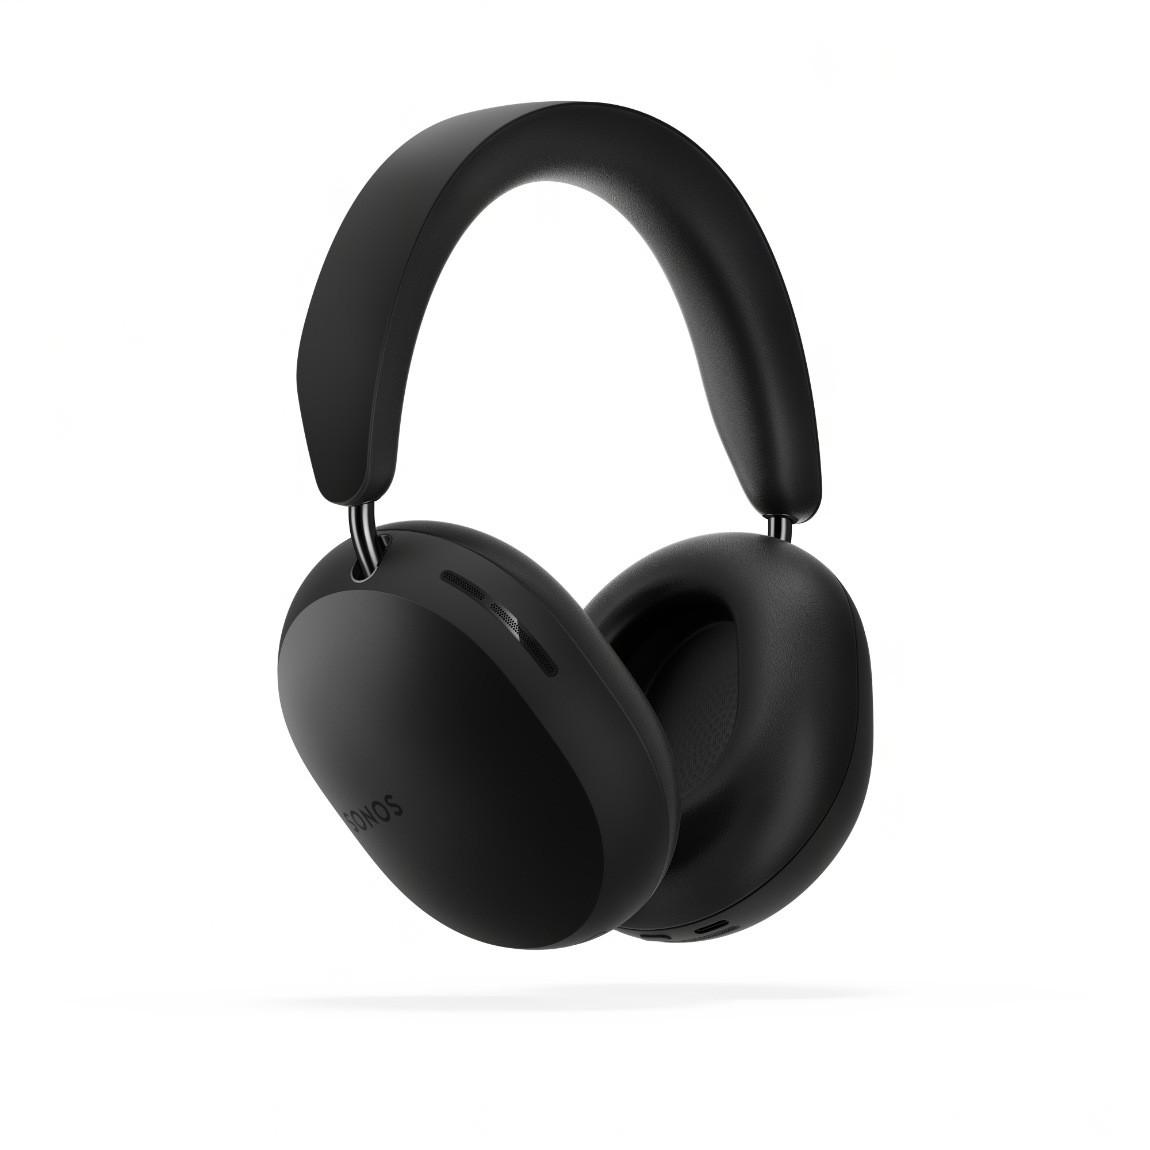 Sonos Ace - Over-Ear-Kopfhörer mit aktiver Geräuschunterdrückung - Schwarz